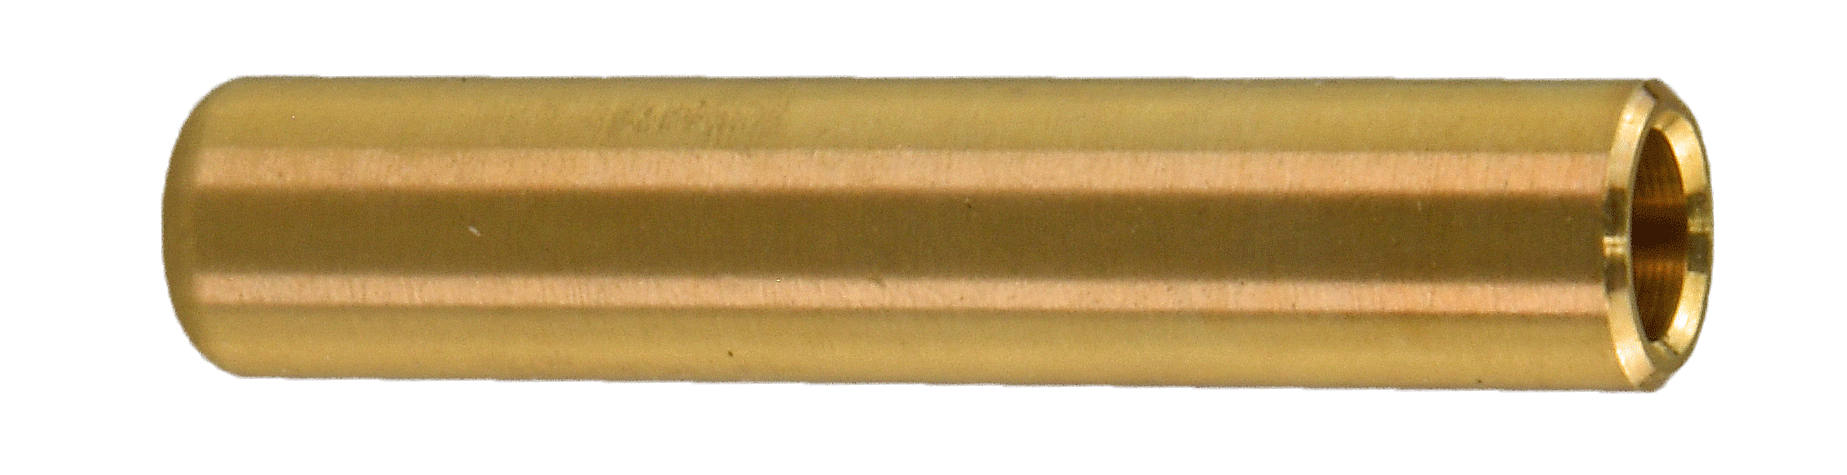 PrimaCreator Adapter PrimaCreator Brass Adapter tube